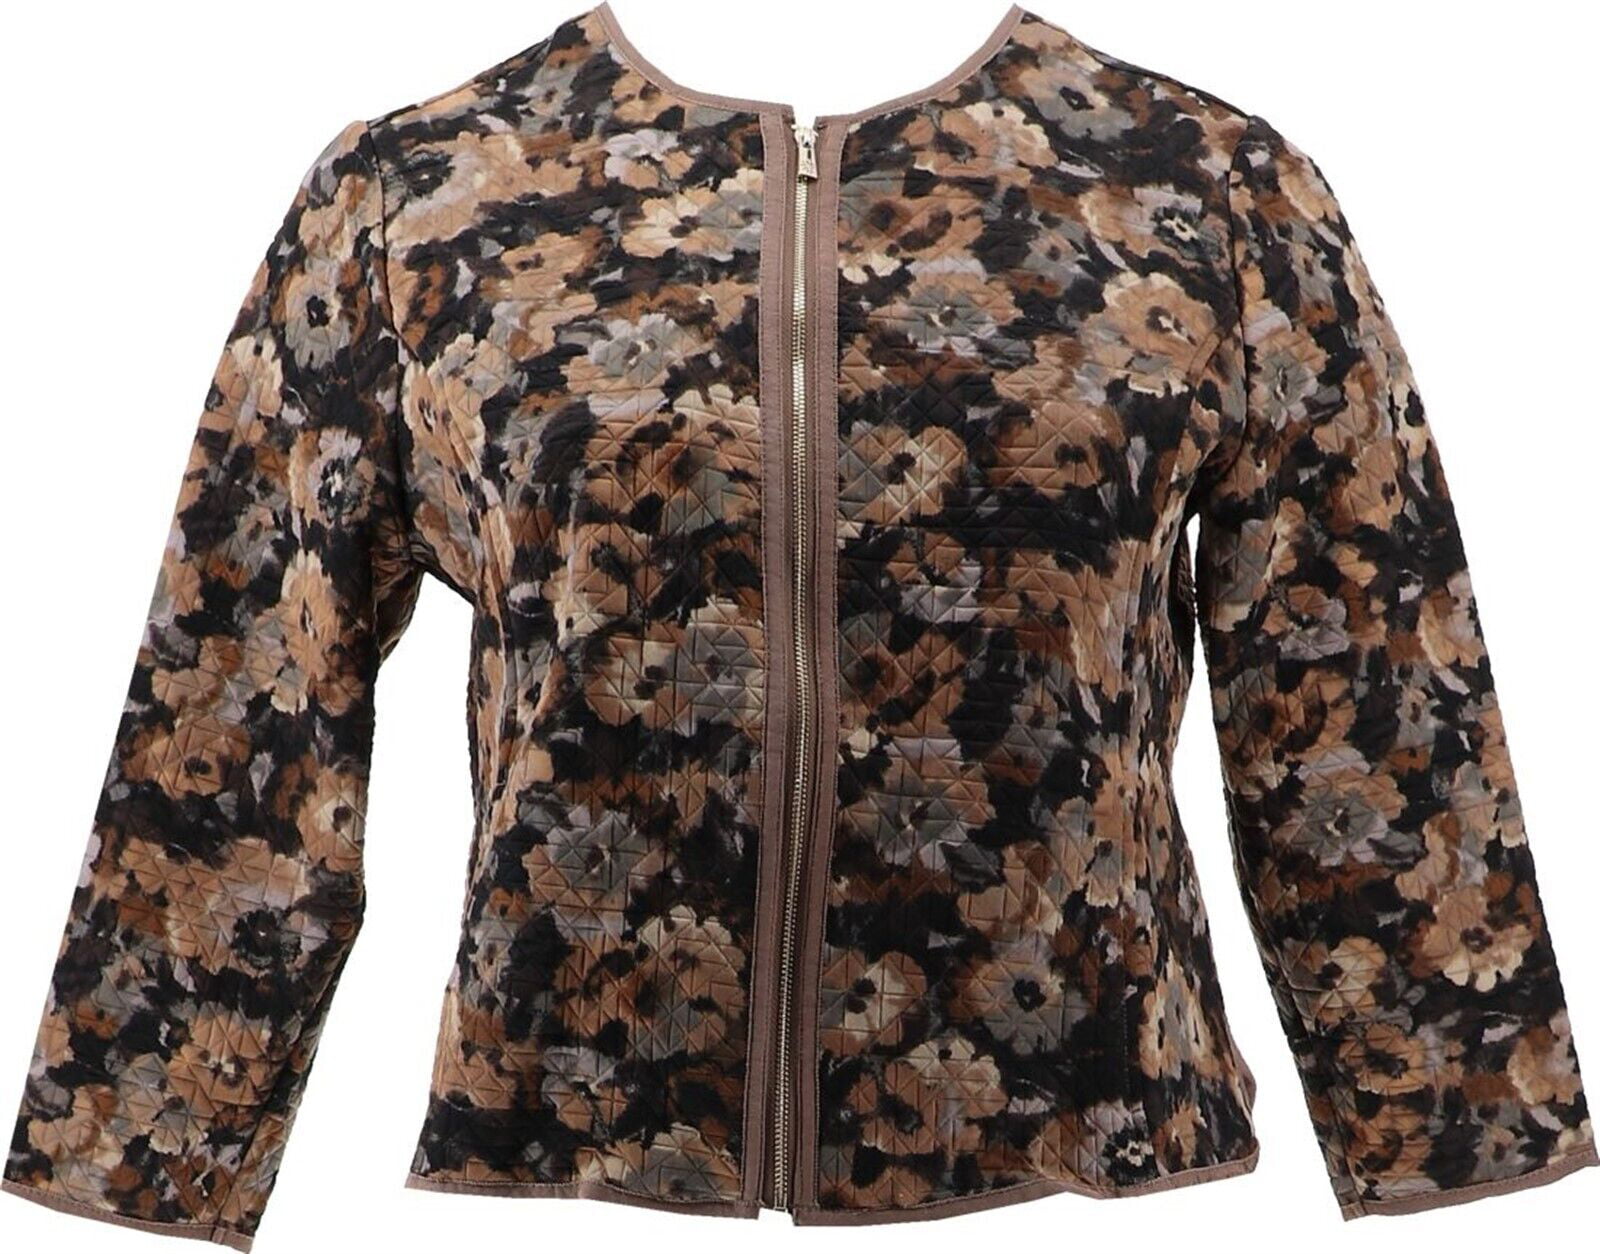 Isaac Mizrahi Floral Printed Knit Jacquard Jacket Women's A463980